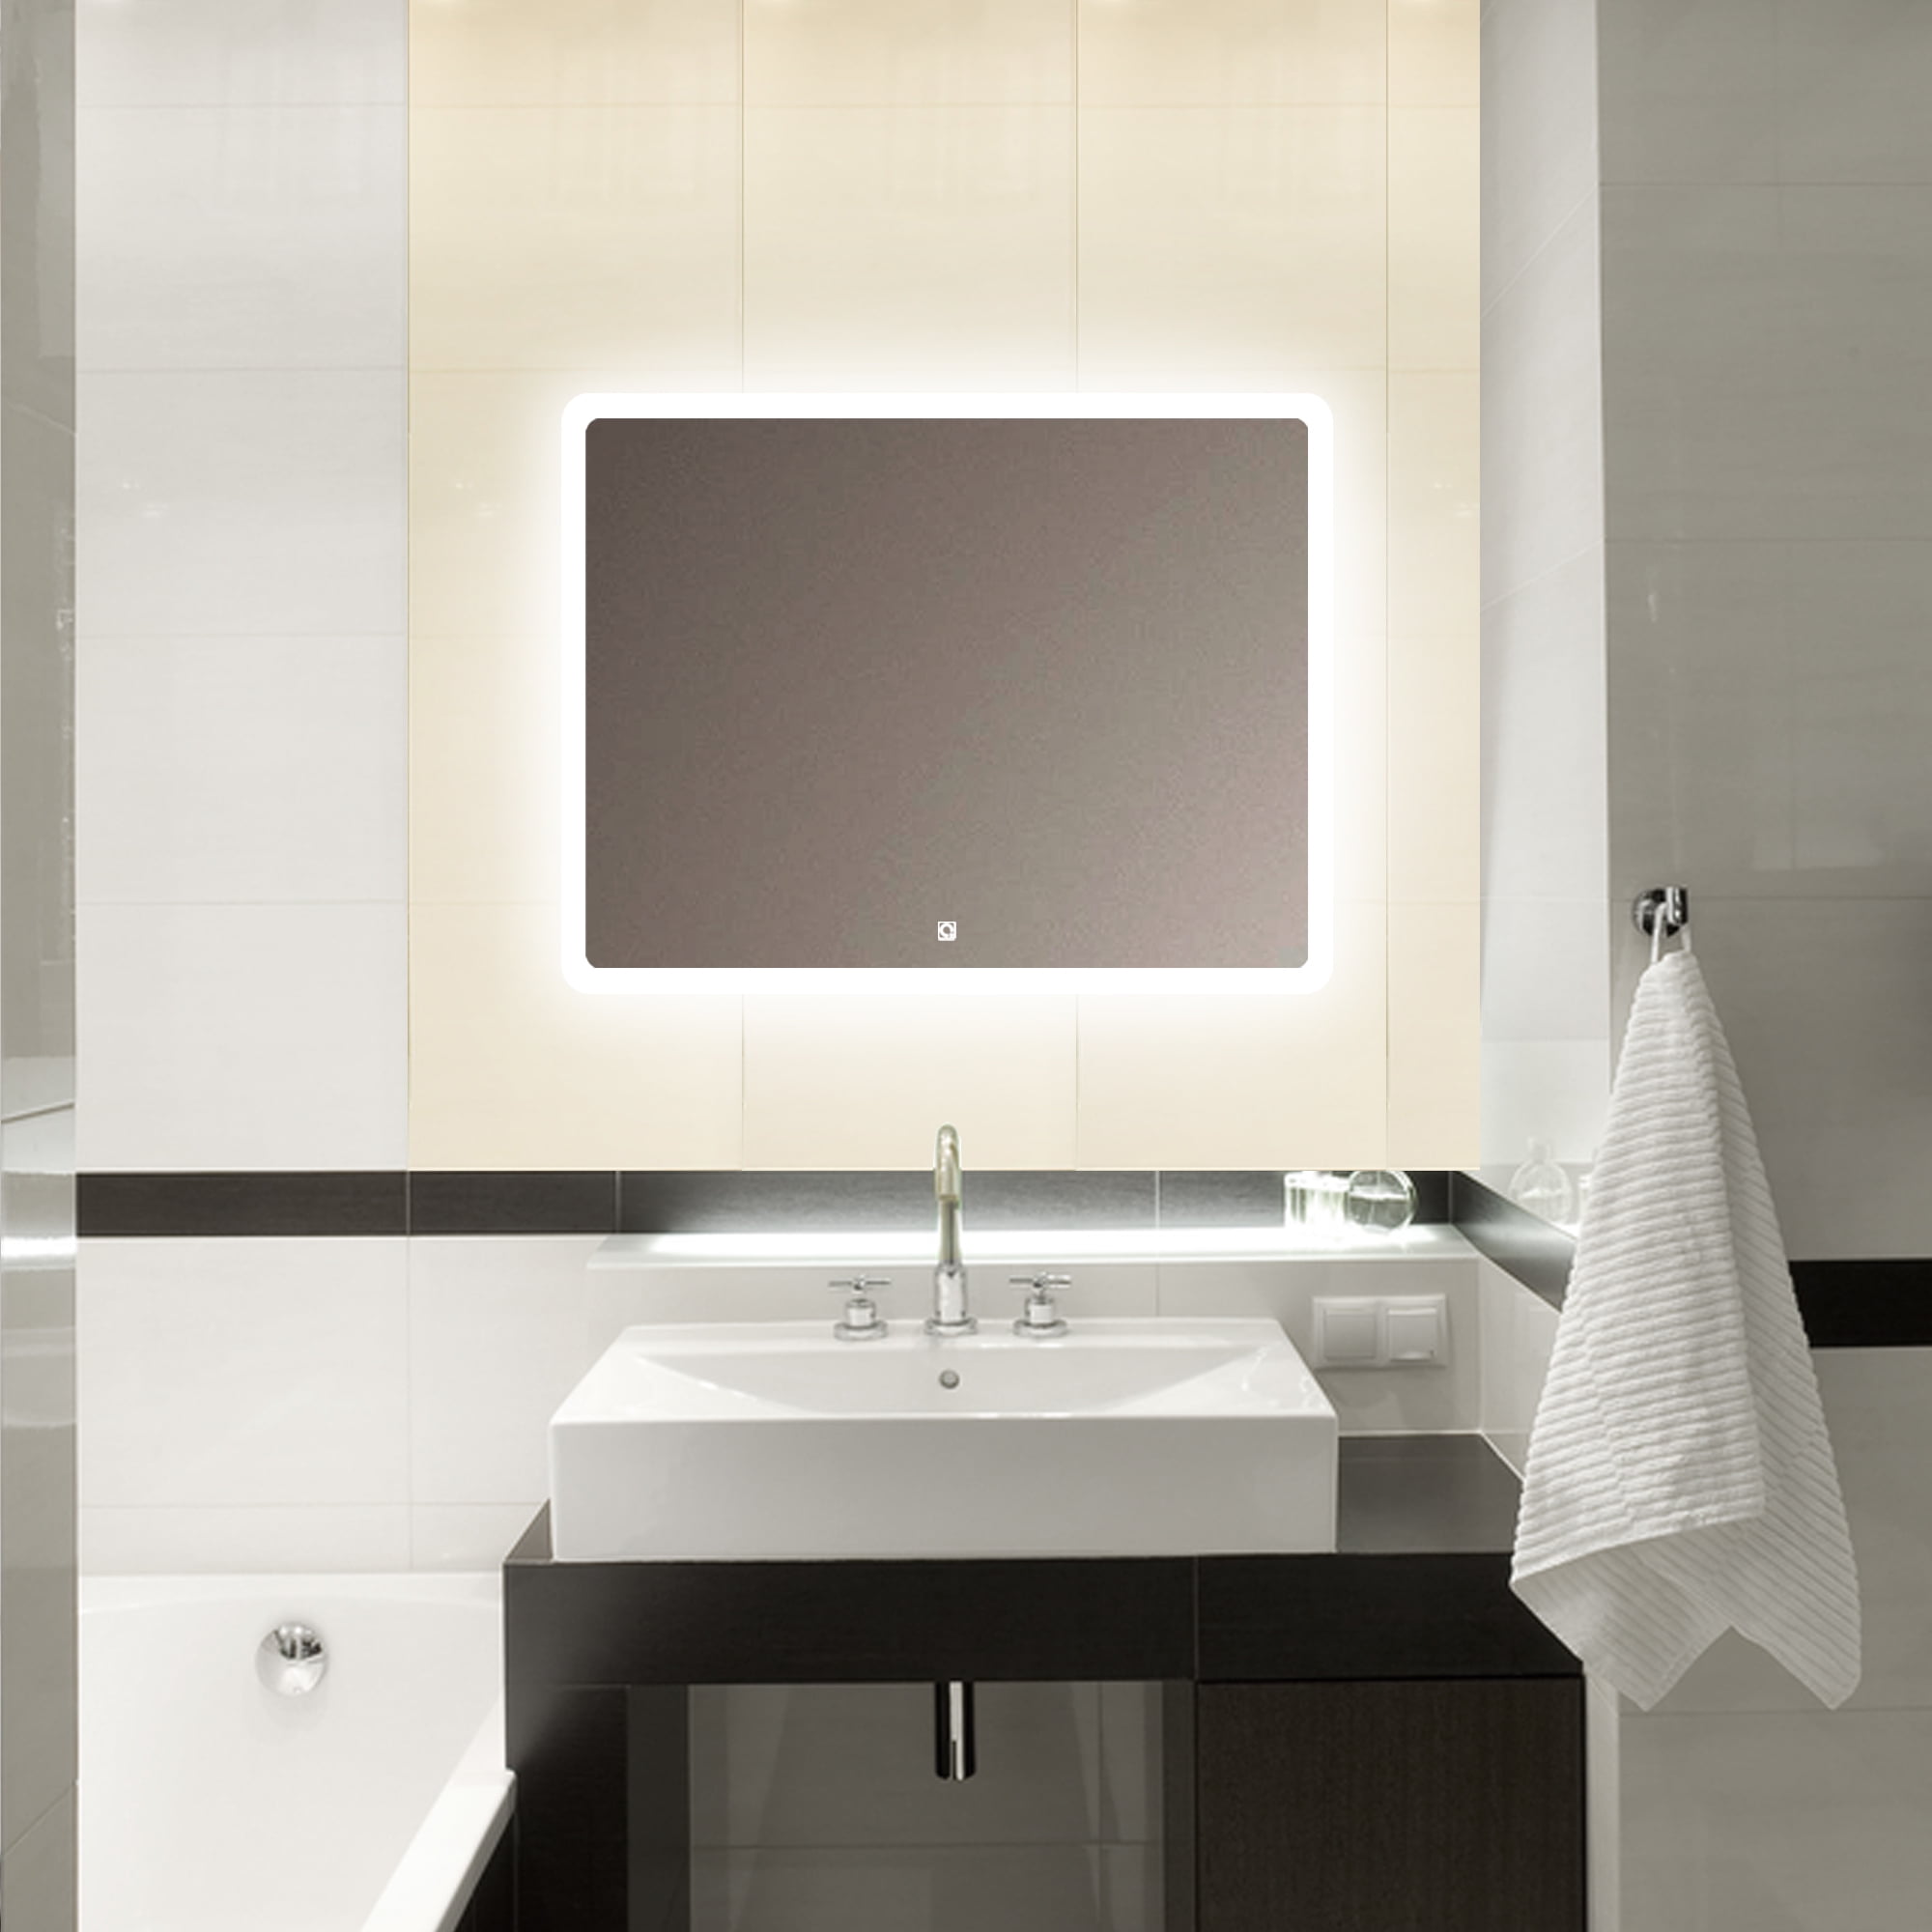 Bathroom mirror 5MM high-Definition Copper-Free Silver Mirror Simple Frameless Simple Modern Toilet Vanity Mirror Makeup Mirror Wall Hanging